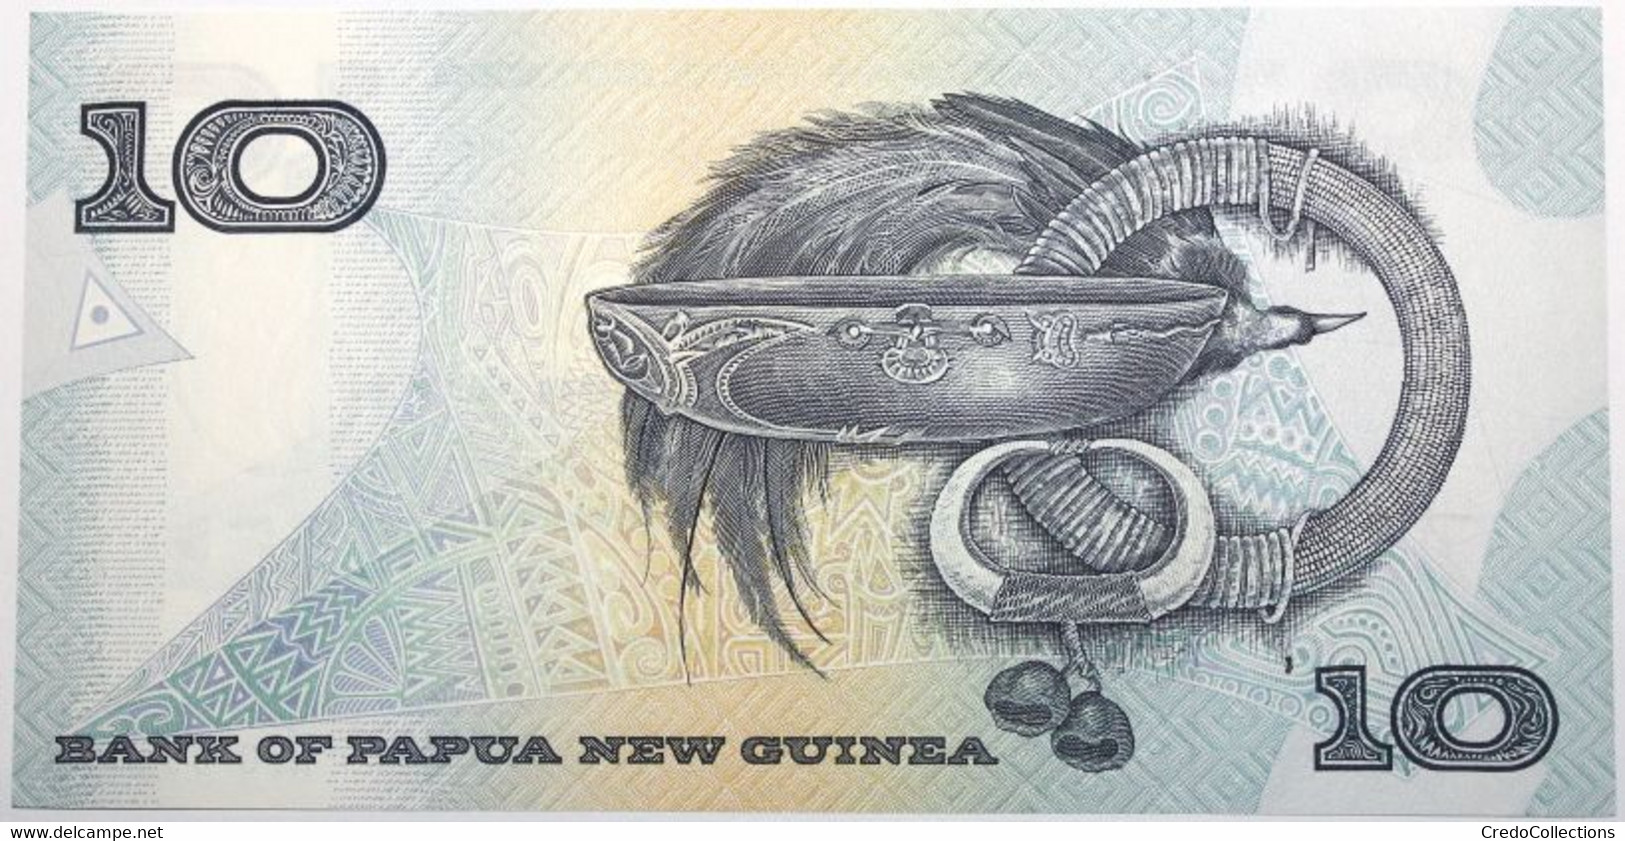 Papouasie-Nouvelle Guinée - 10 Kina - 1997 - PICK 9d - NEUF - Papua New Guinea